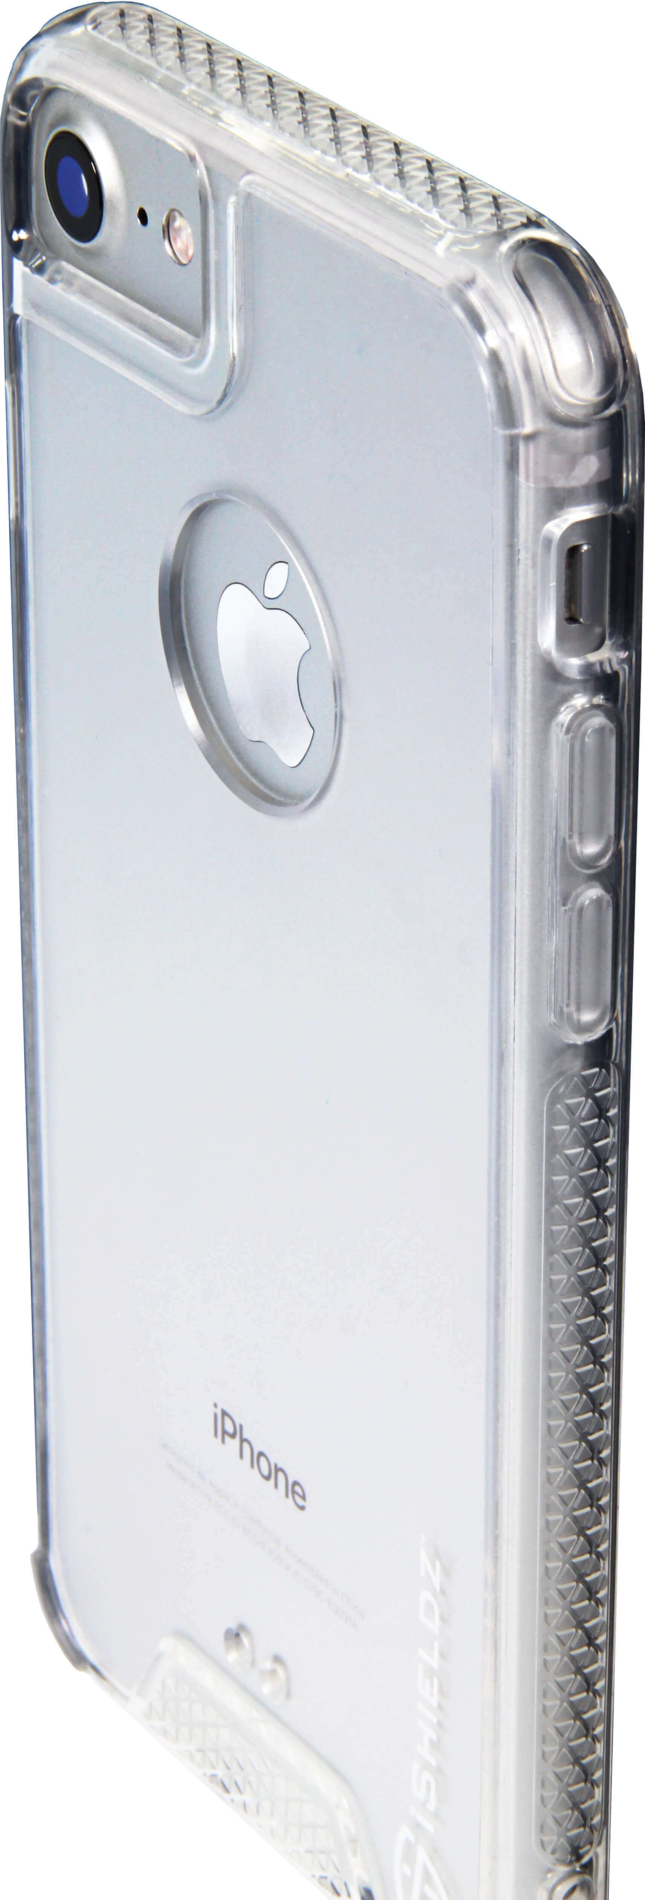 iPhone 8/7 Bodyguard Clear Case - Clear